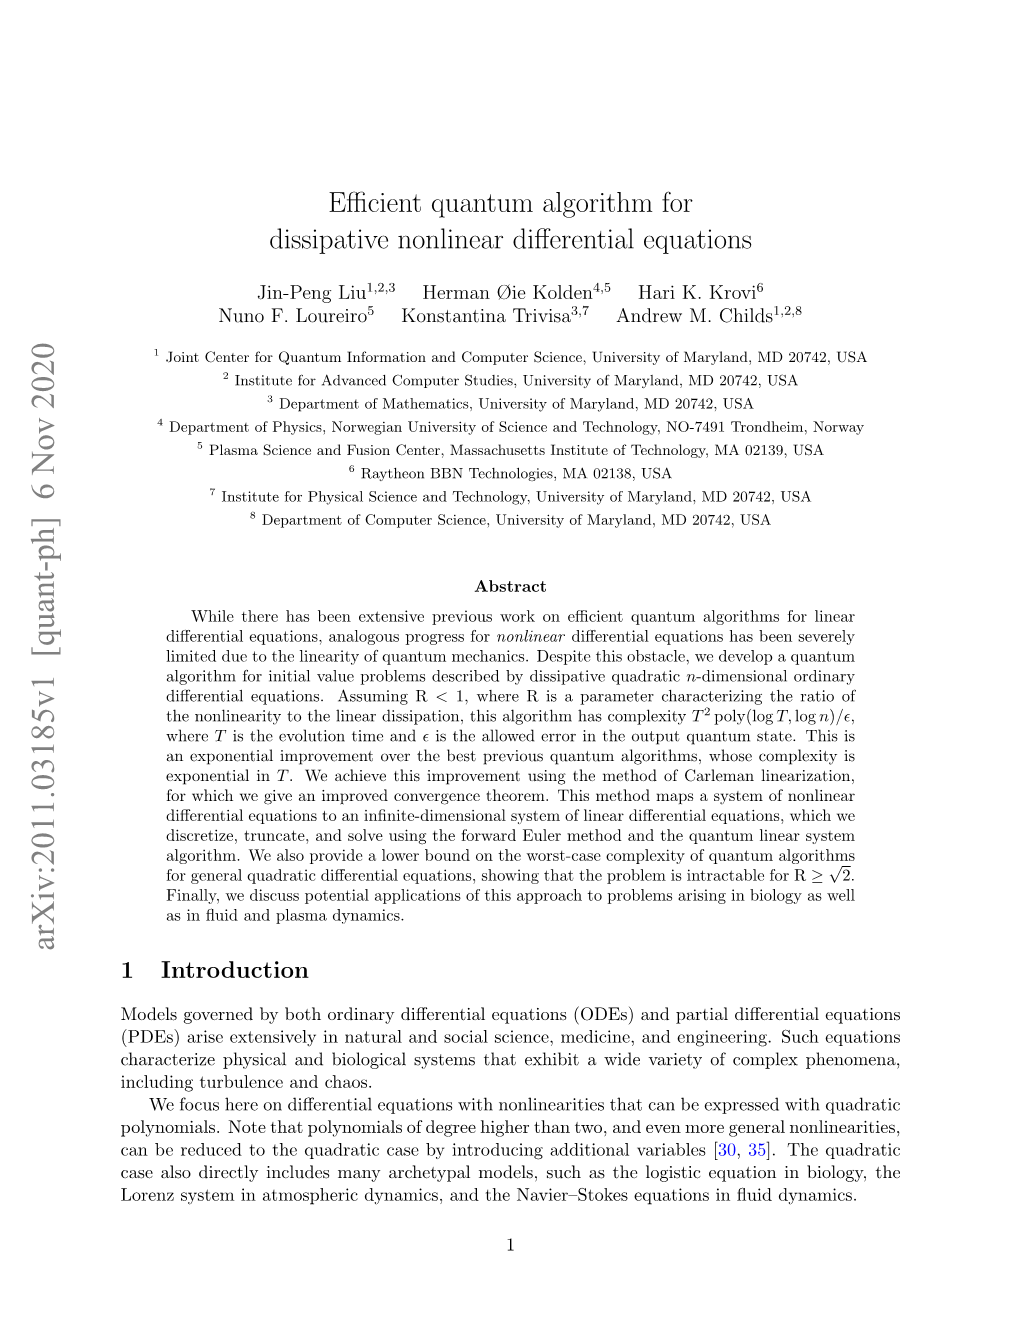 Efficient Quantum Algorithm for Dissipative Nonlinear Differential